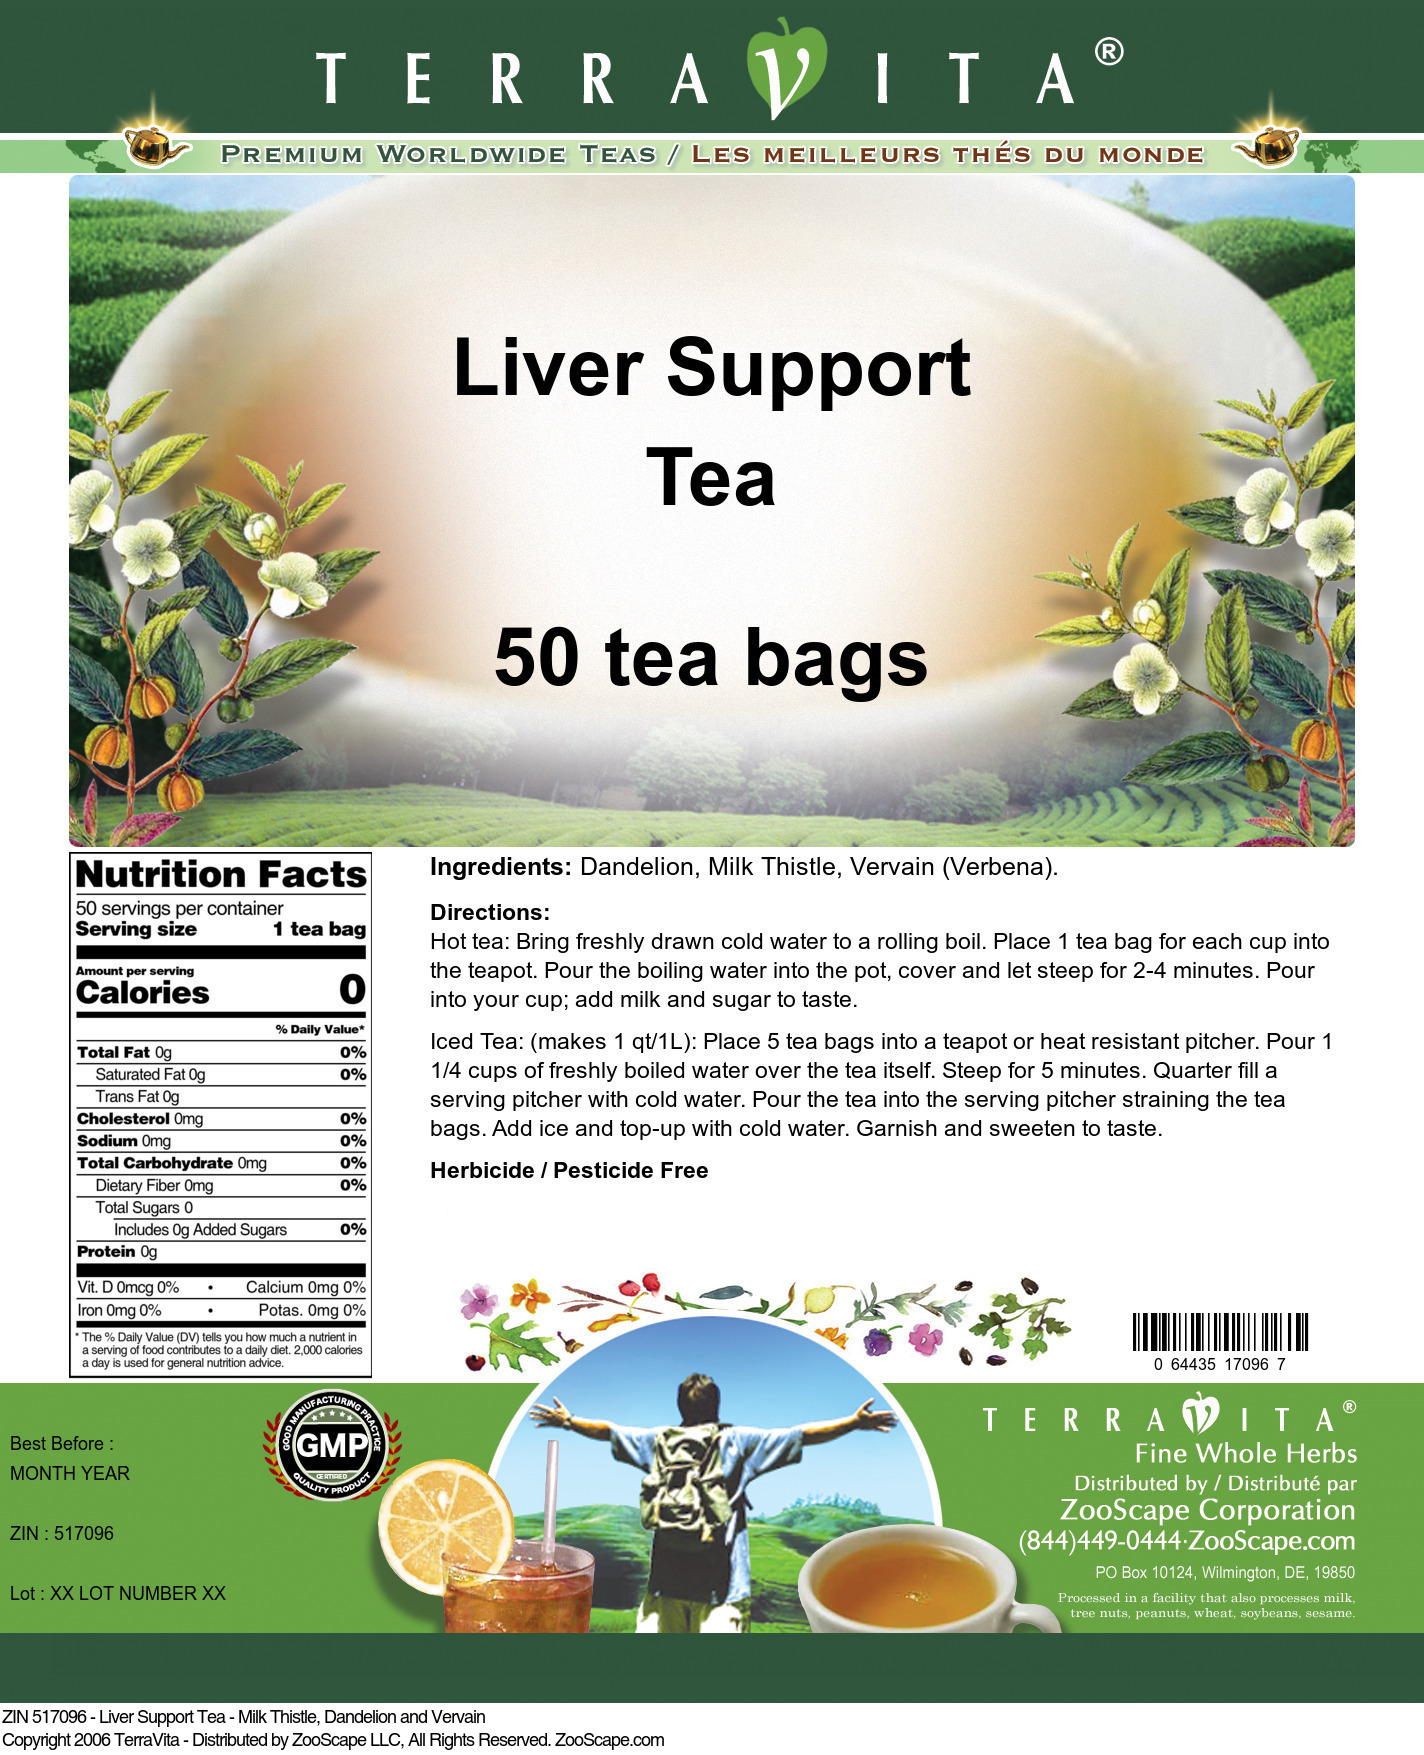 Liver Support Tea - Milk Thistle, Dandelion and Vervain - Label